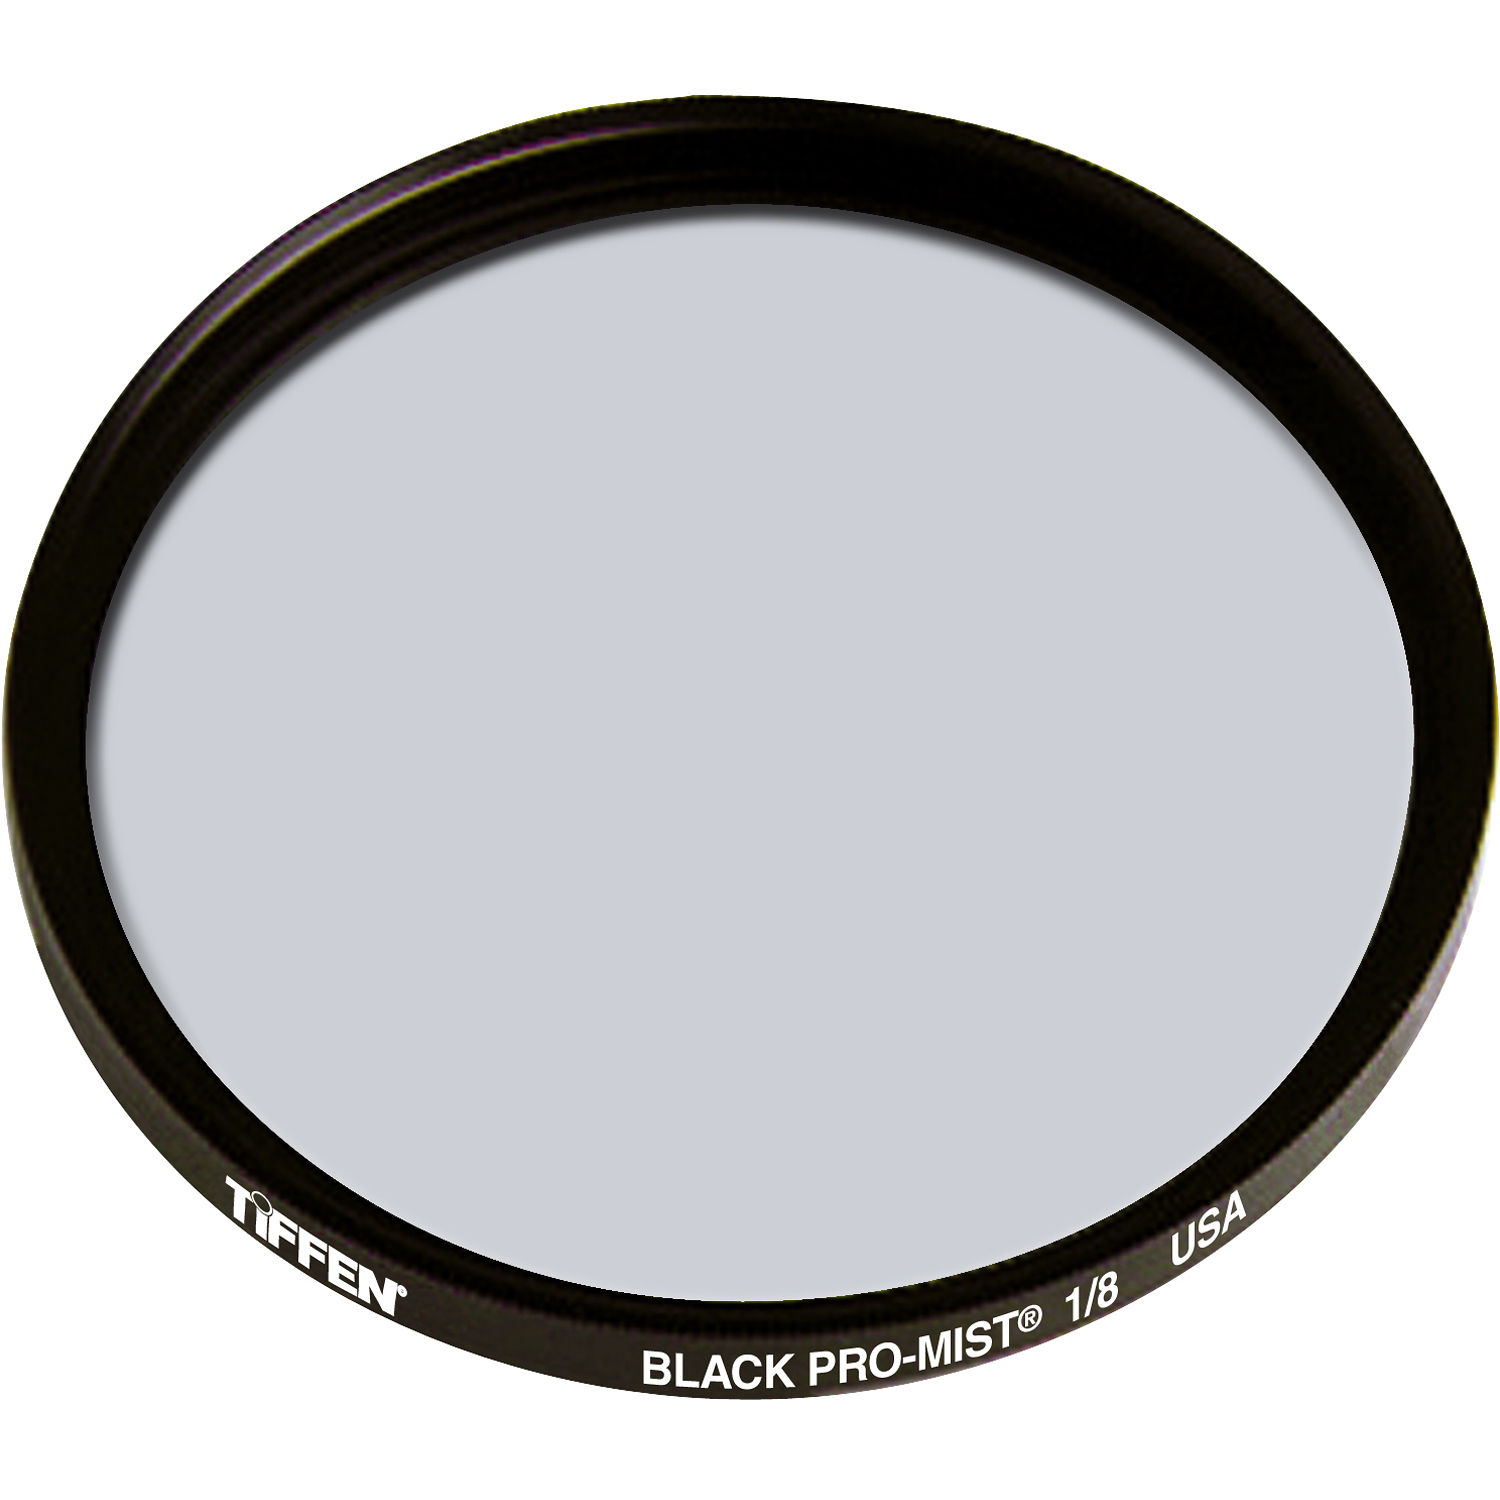 Tiffen Black Pro-Mist 1/8 Filter